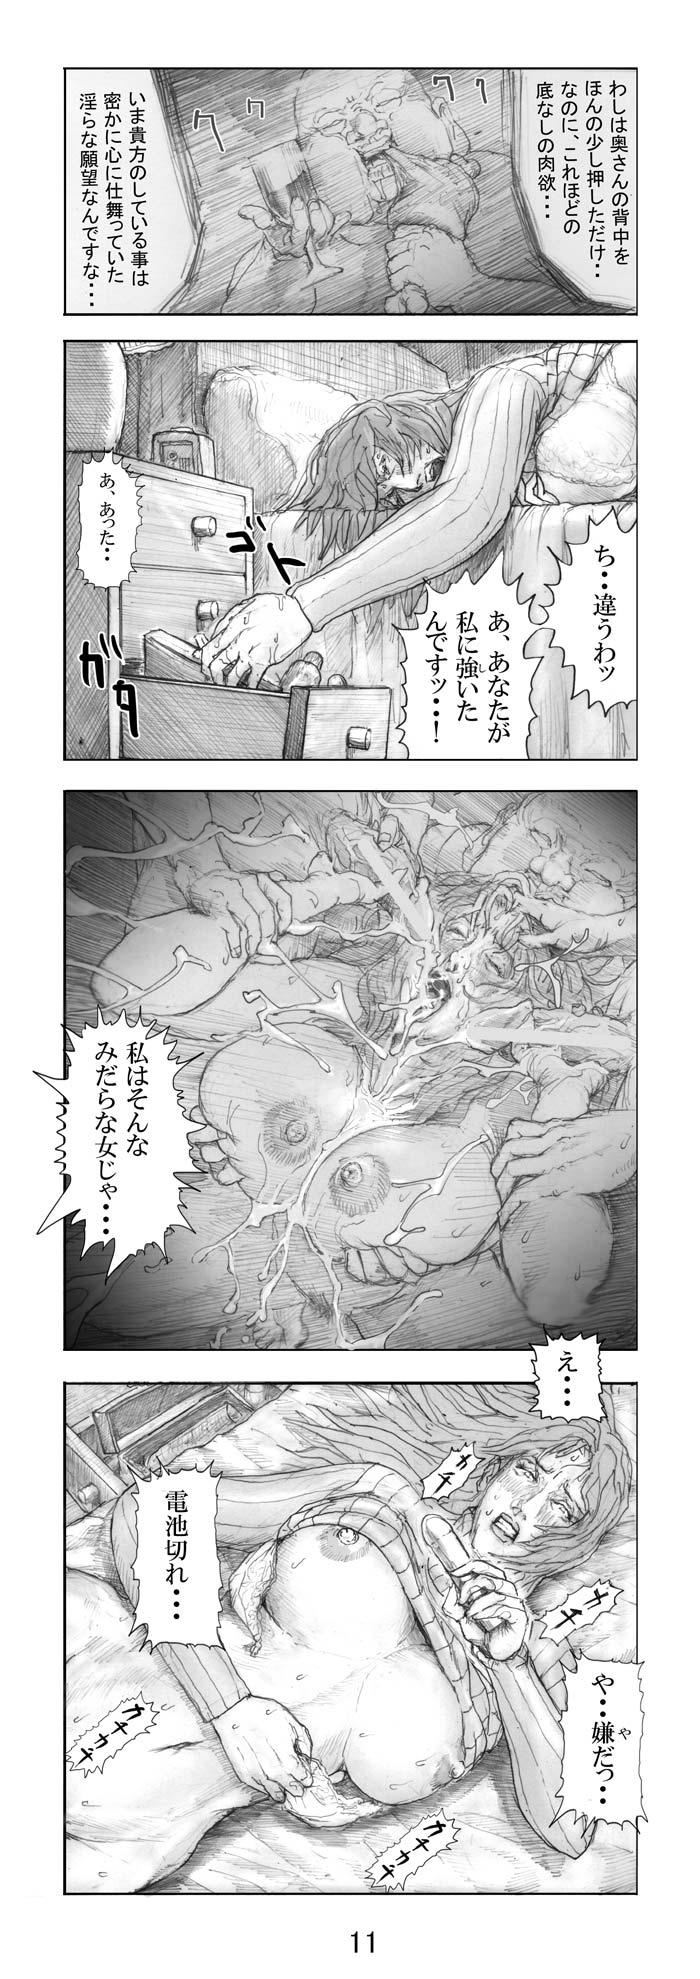 Utsukushii no Shingen Part 3 11